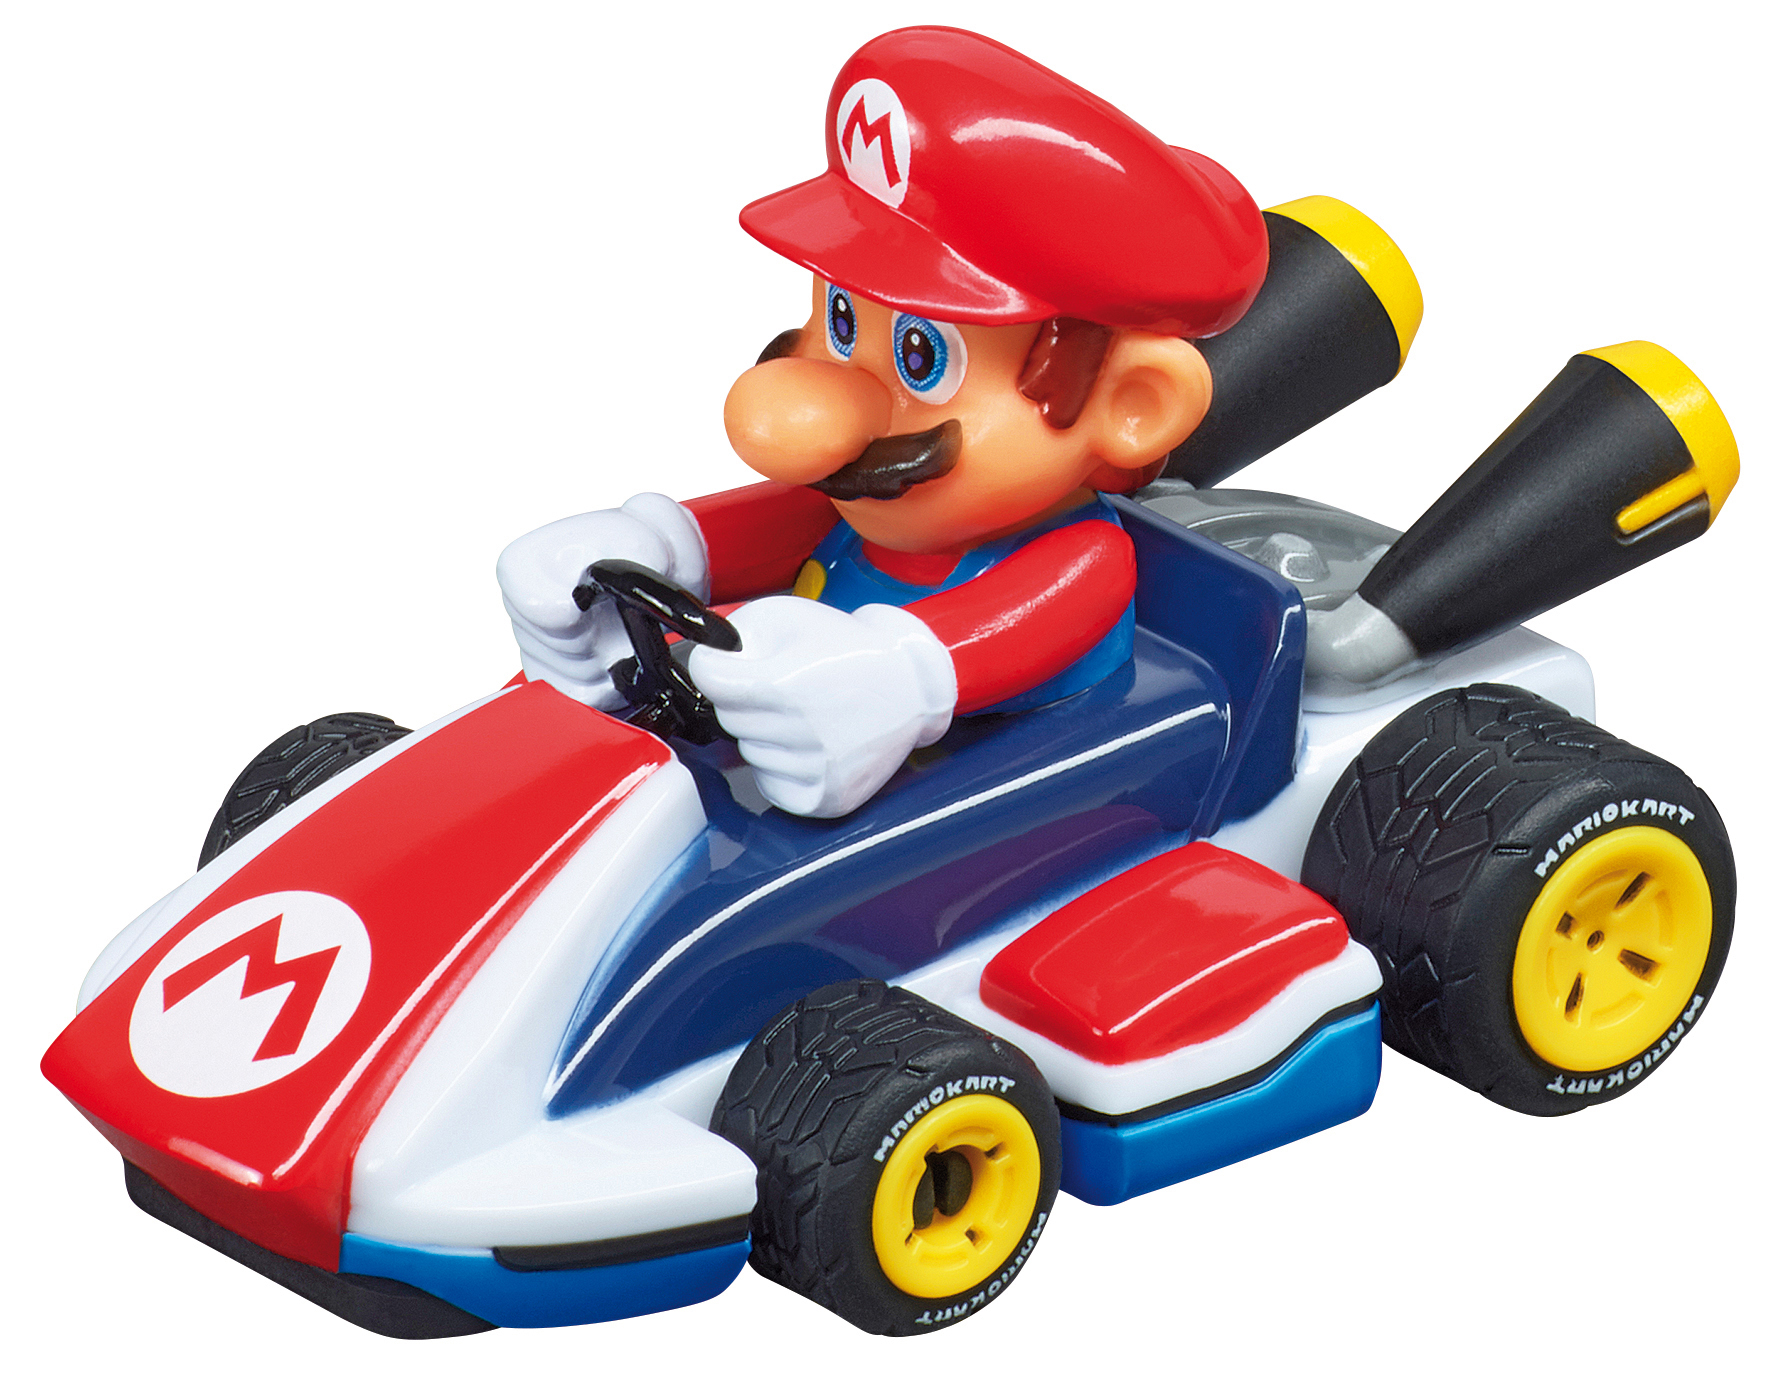 First CARRERA Mehrfarbig Kart™ Rennbahn, Mario Nintendo (TOYS)